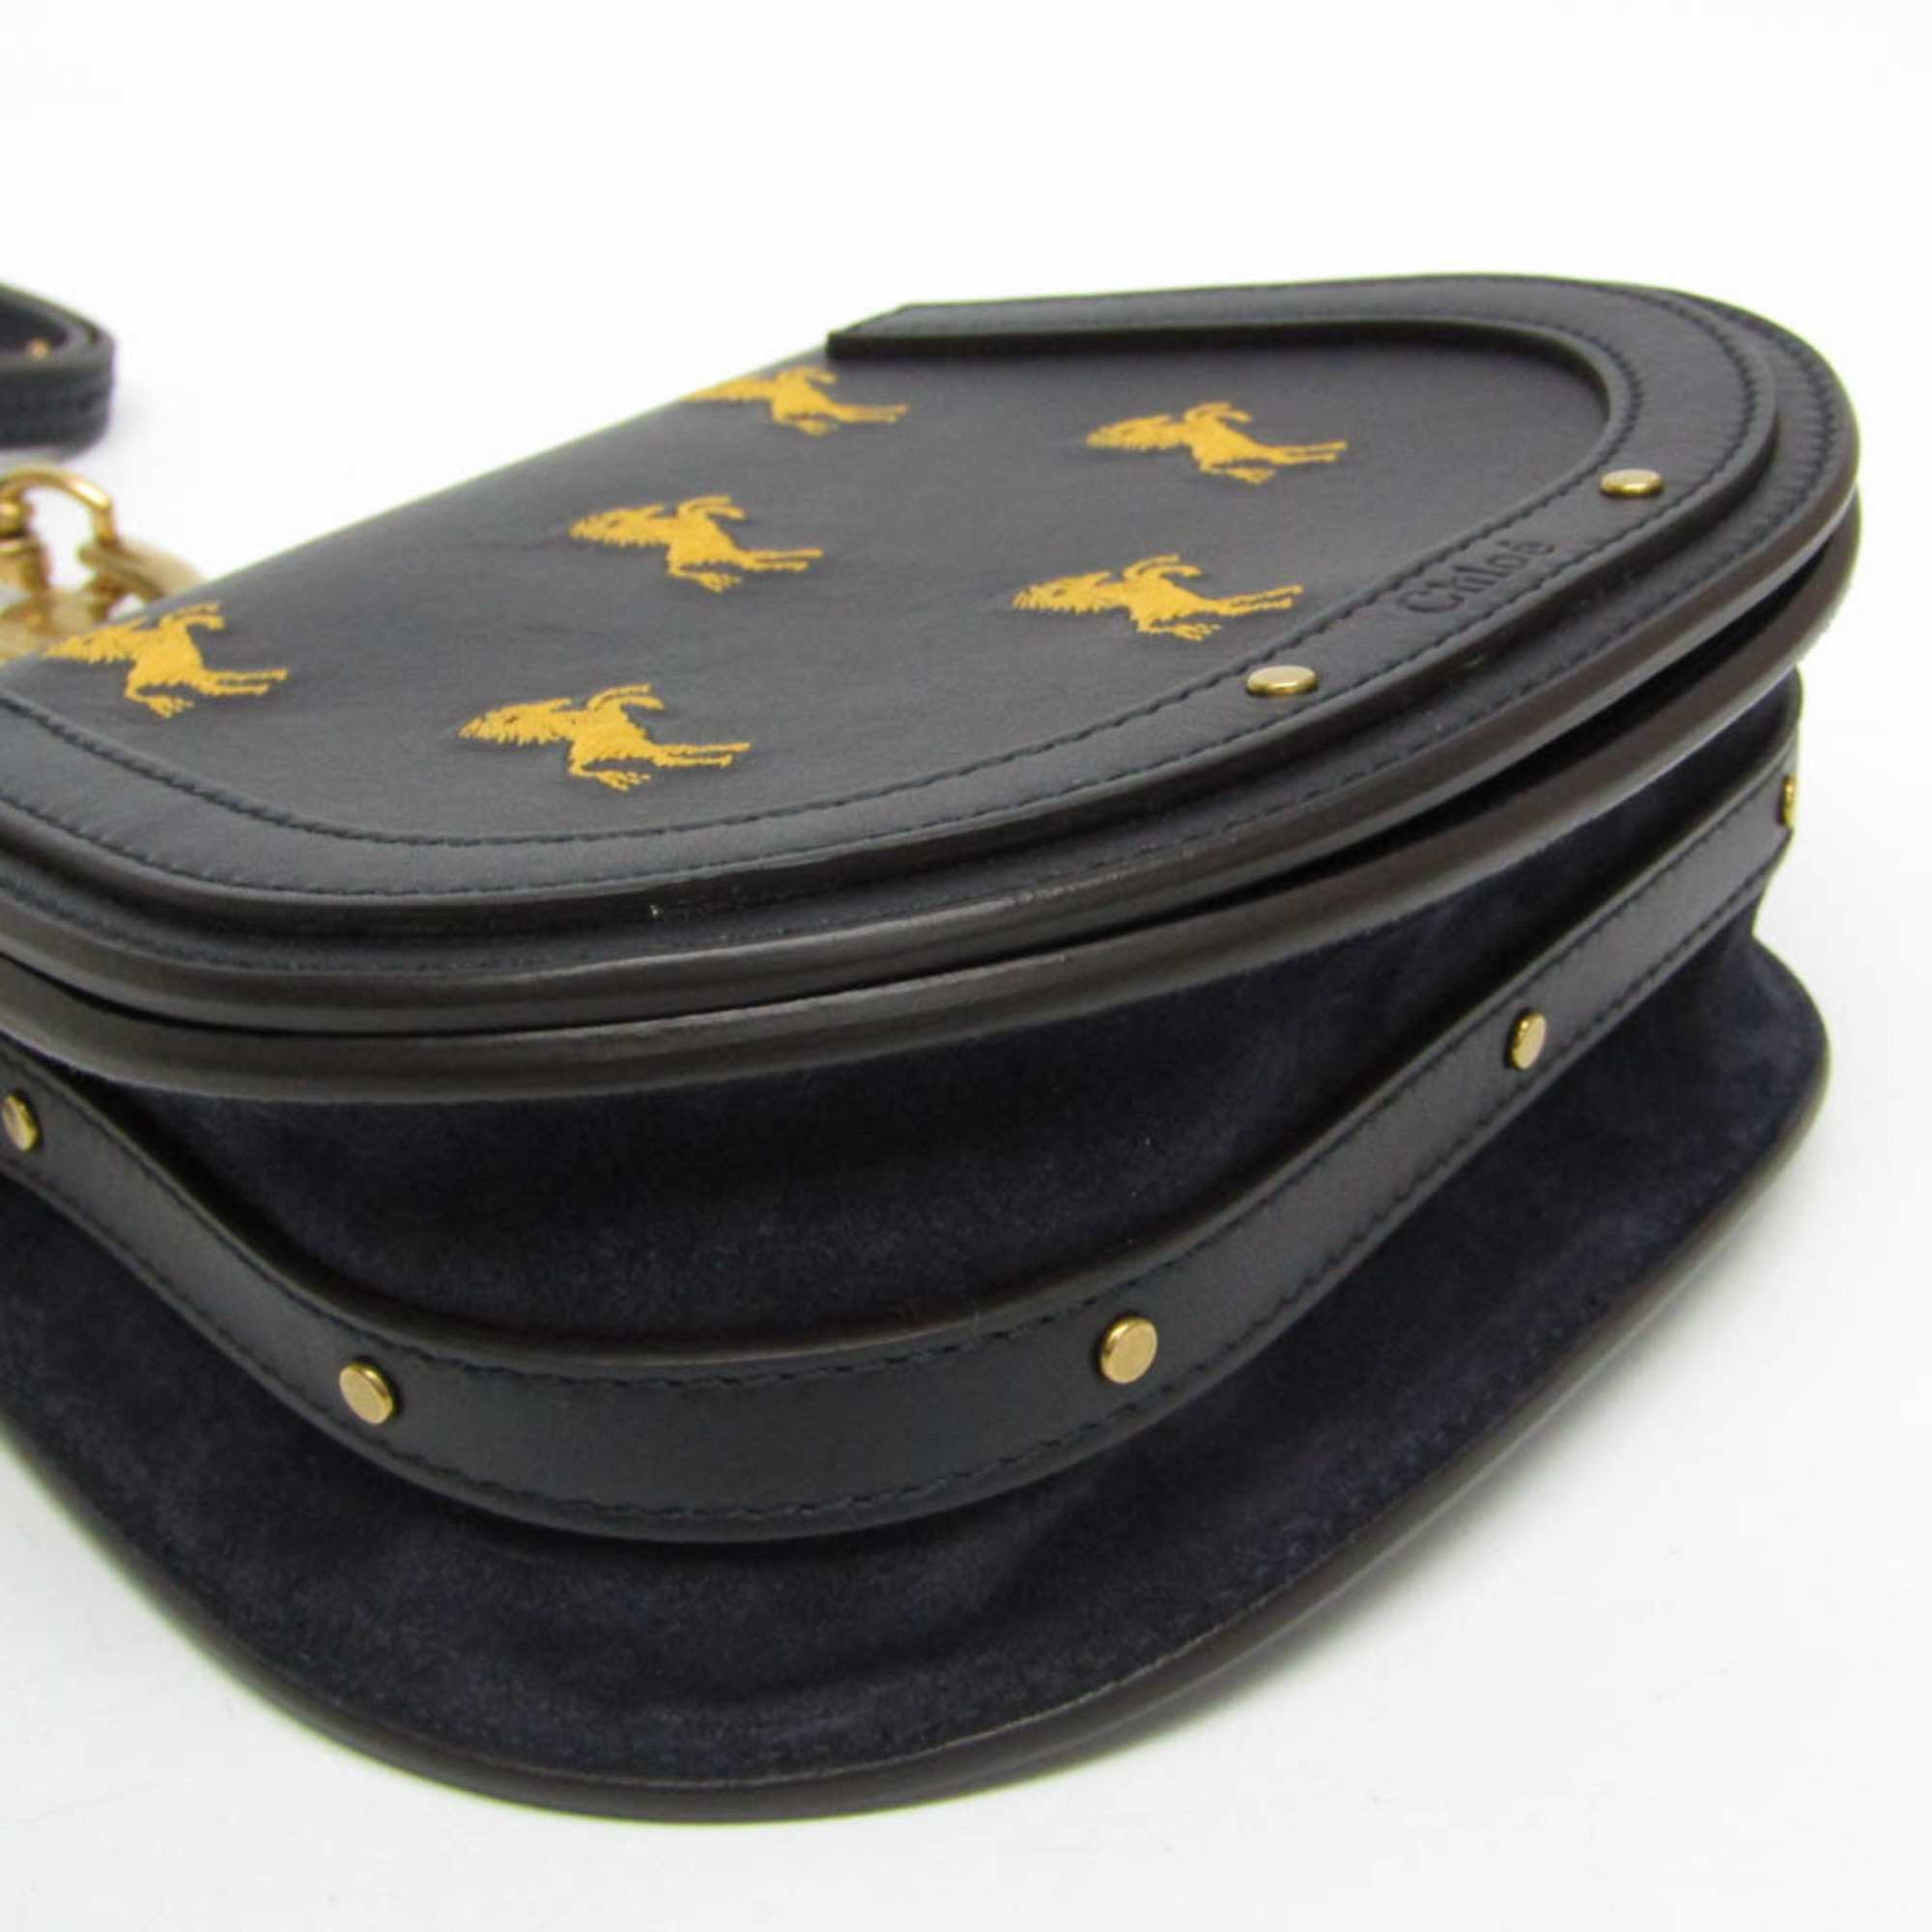 Chloé Little Horse Women's Leather,Suede Shoulder Bag Dark Navy